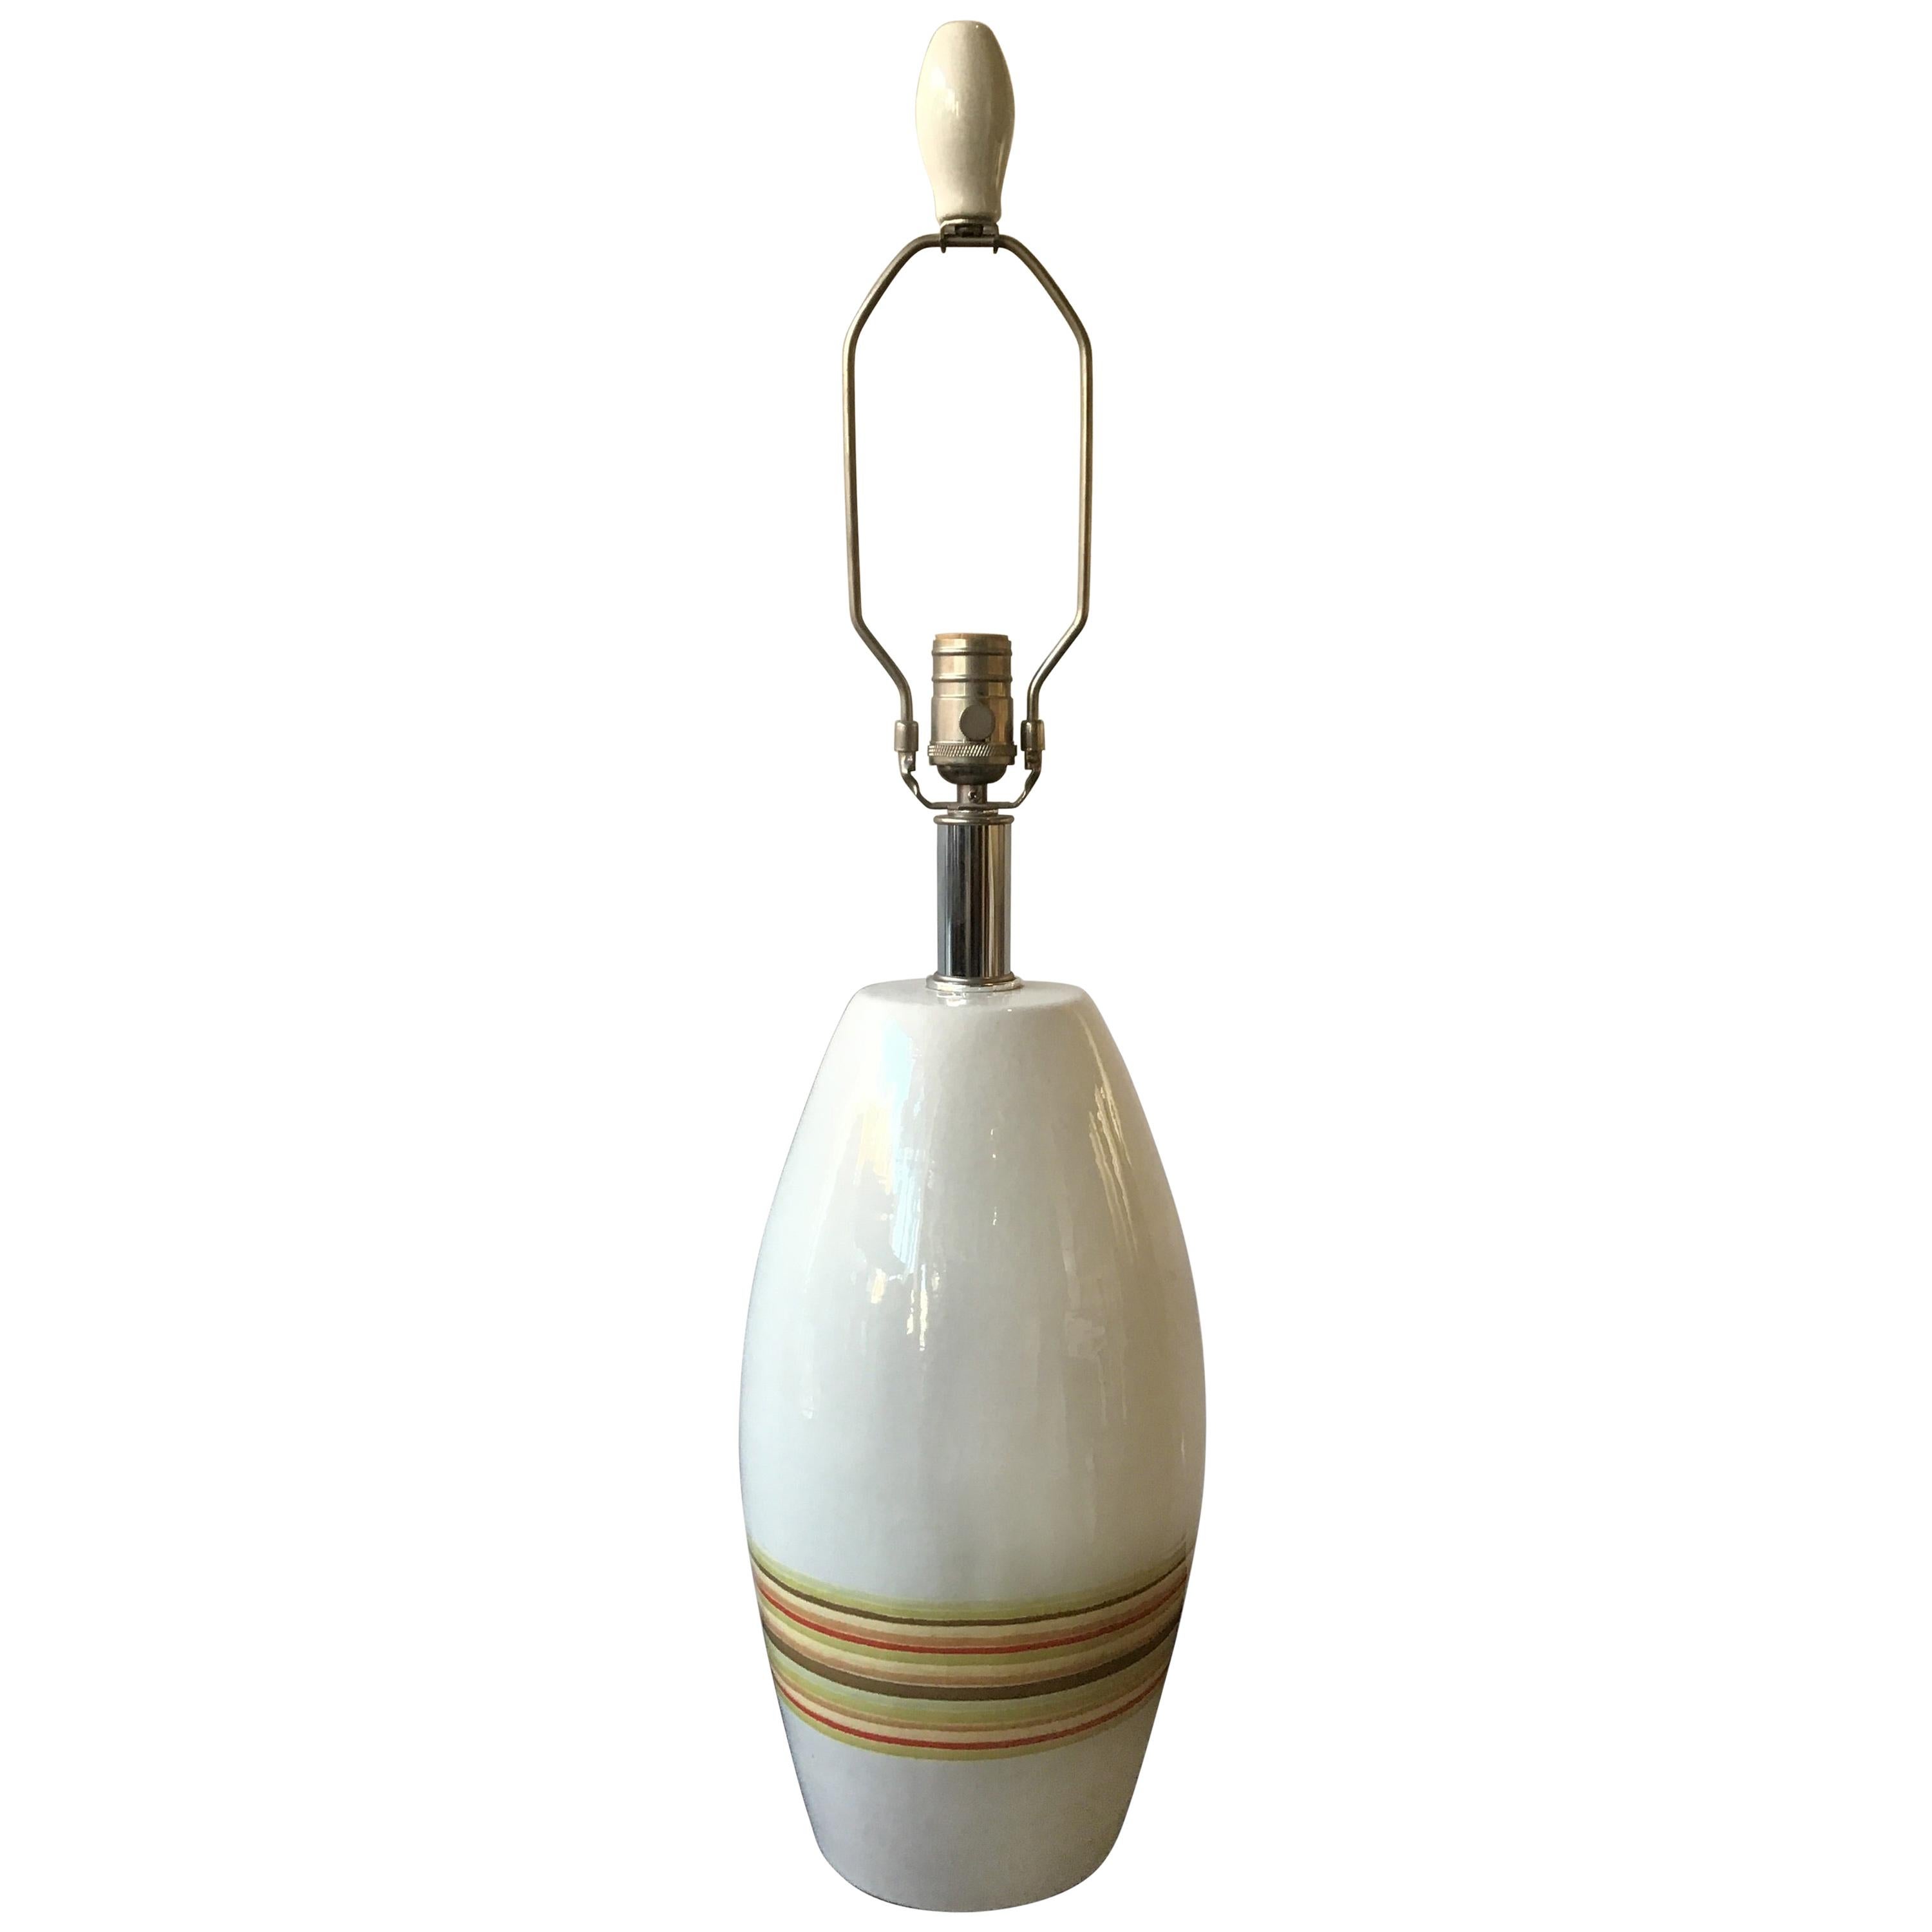 Jill Rosenwald Ceramic Striped Lamp For Sale